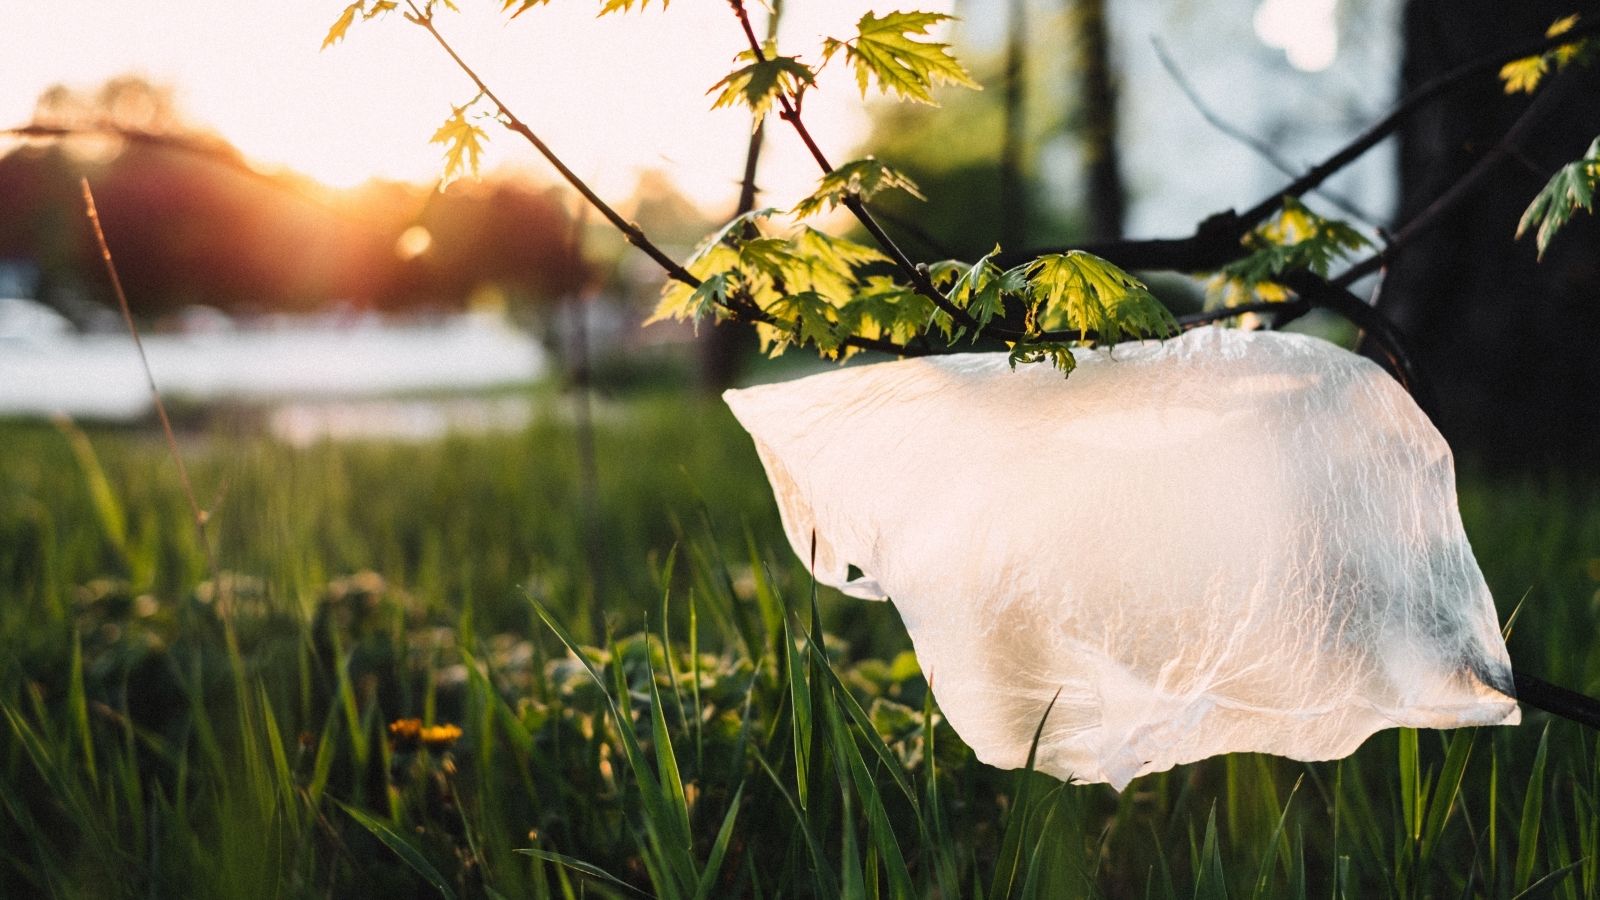 New Jersey considers banning plastic bags, straws, Styrofoam - WHYY